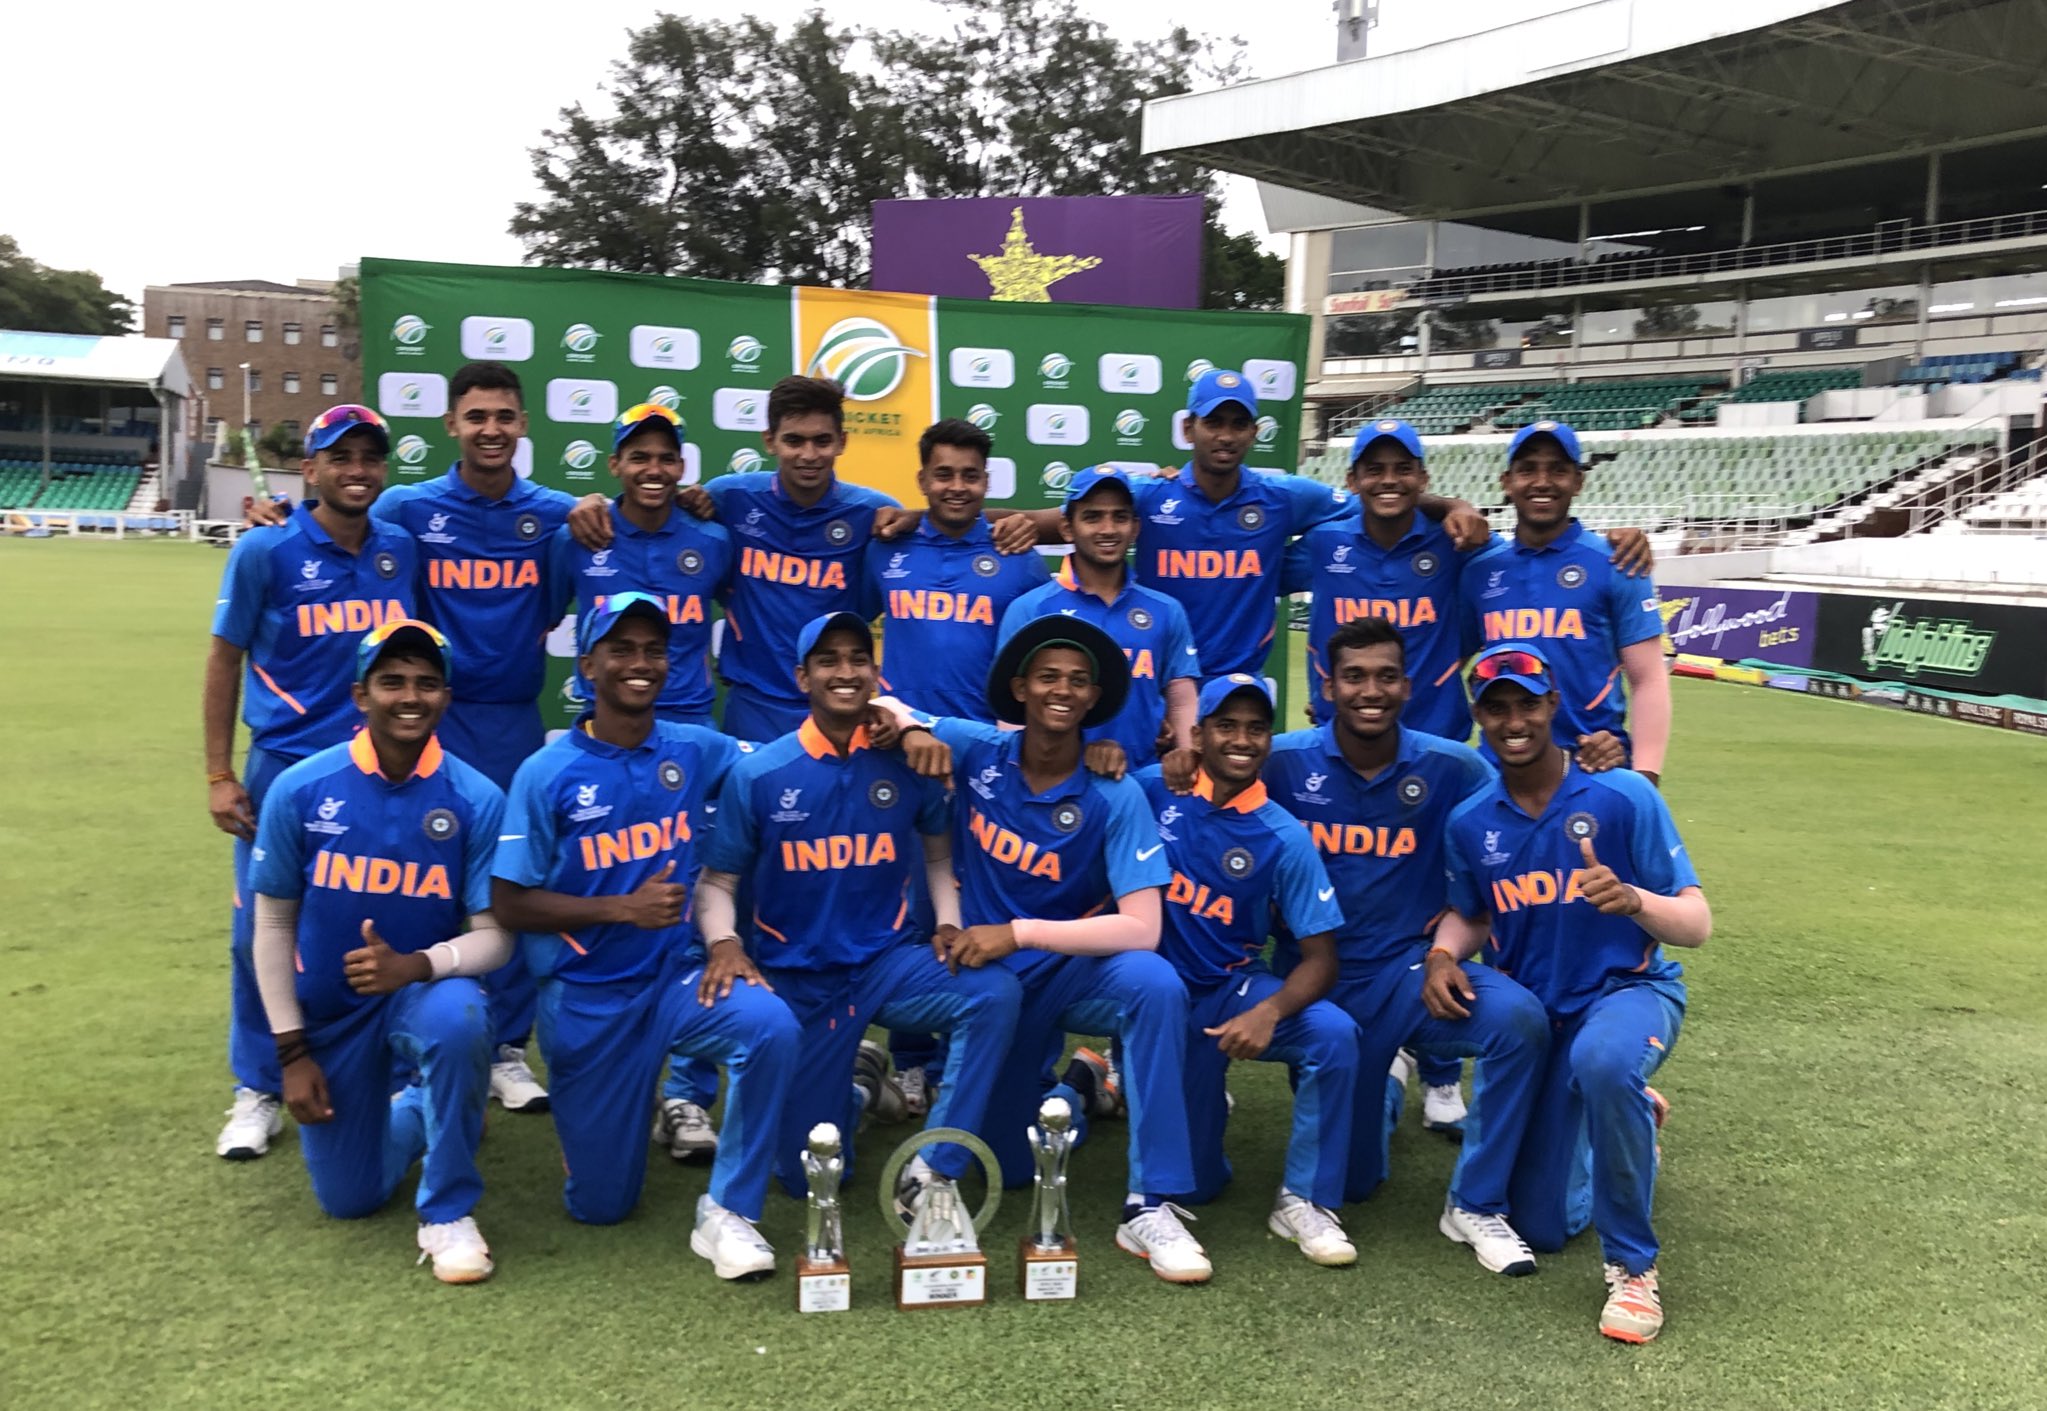 U-19 Quandrangular Series | Dhruv Jurel, Artharva Ankolekar star in India's win